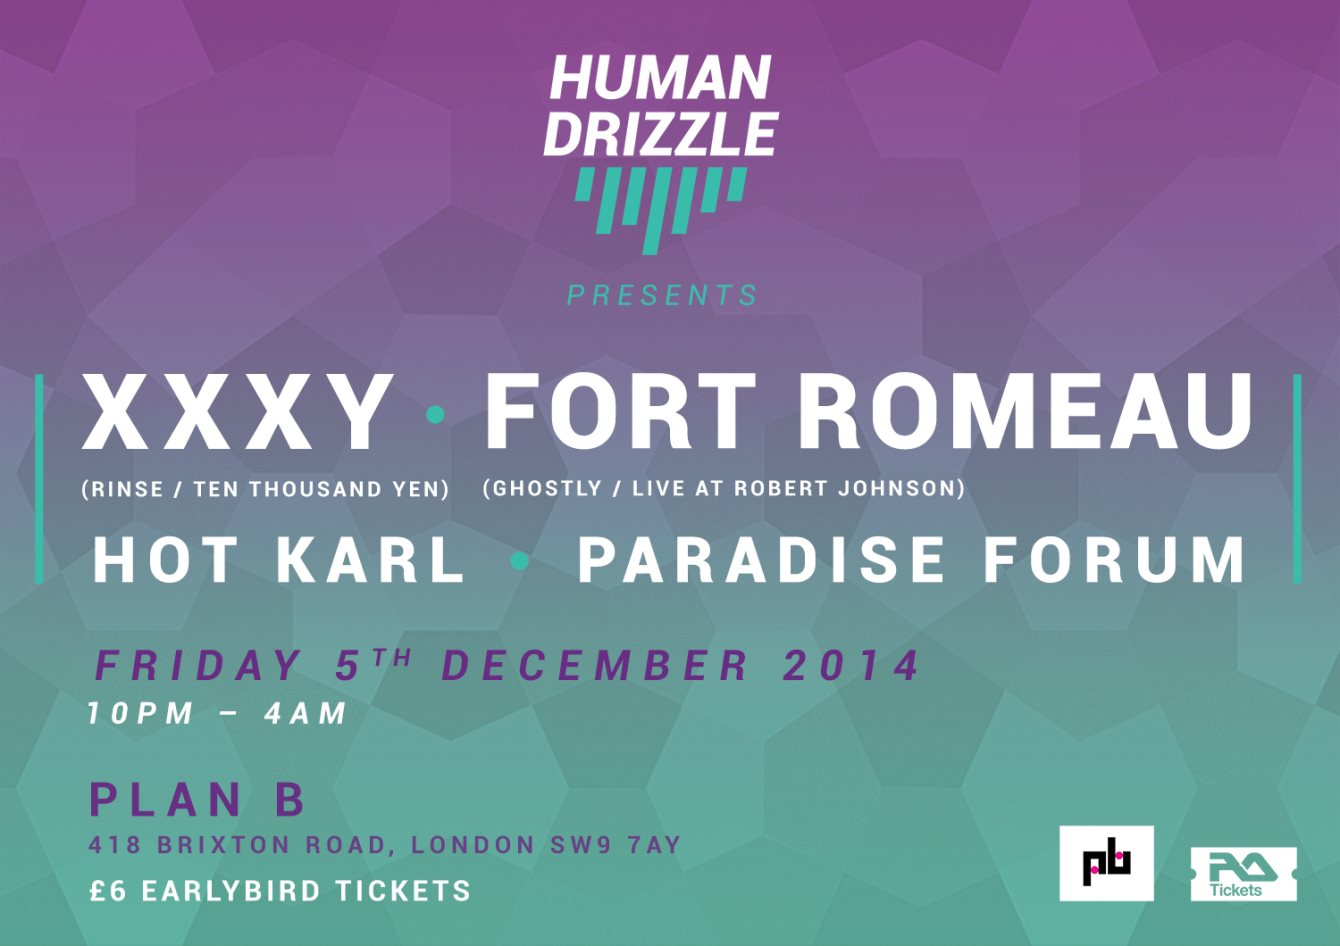 Human Drizzle presents...Fort Romeau, Xxxy & Paradise Forum - Flyer front